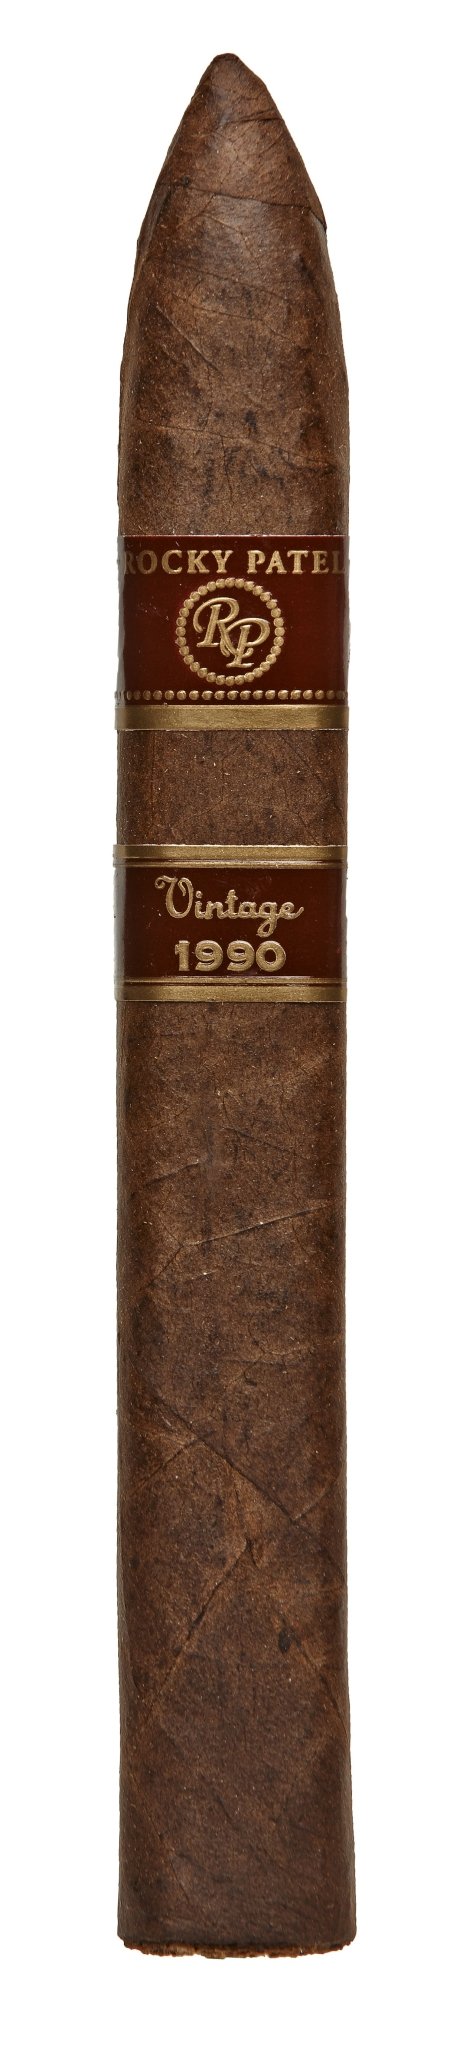 Rocky Patel Vintage 1990 Torpedo - Cigar Port